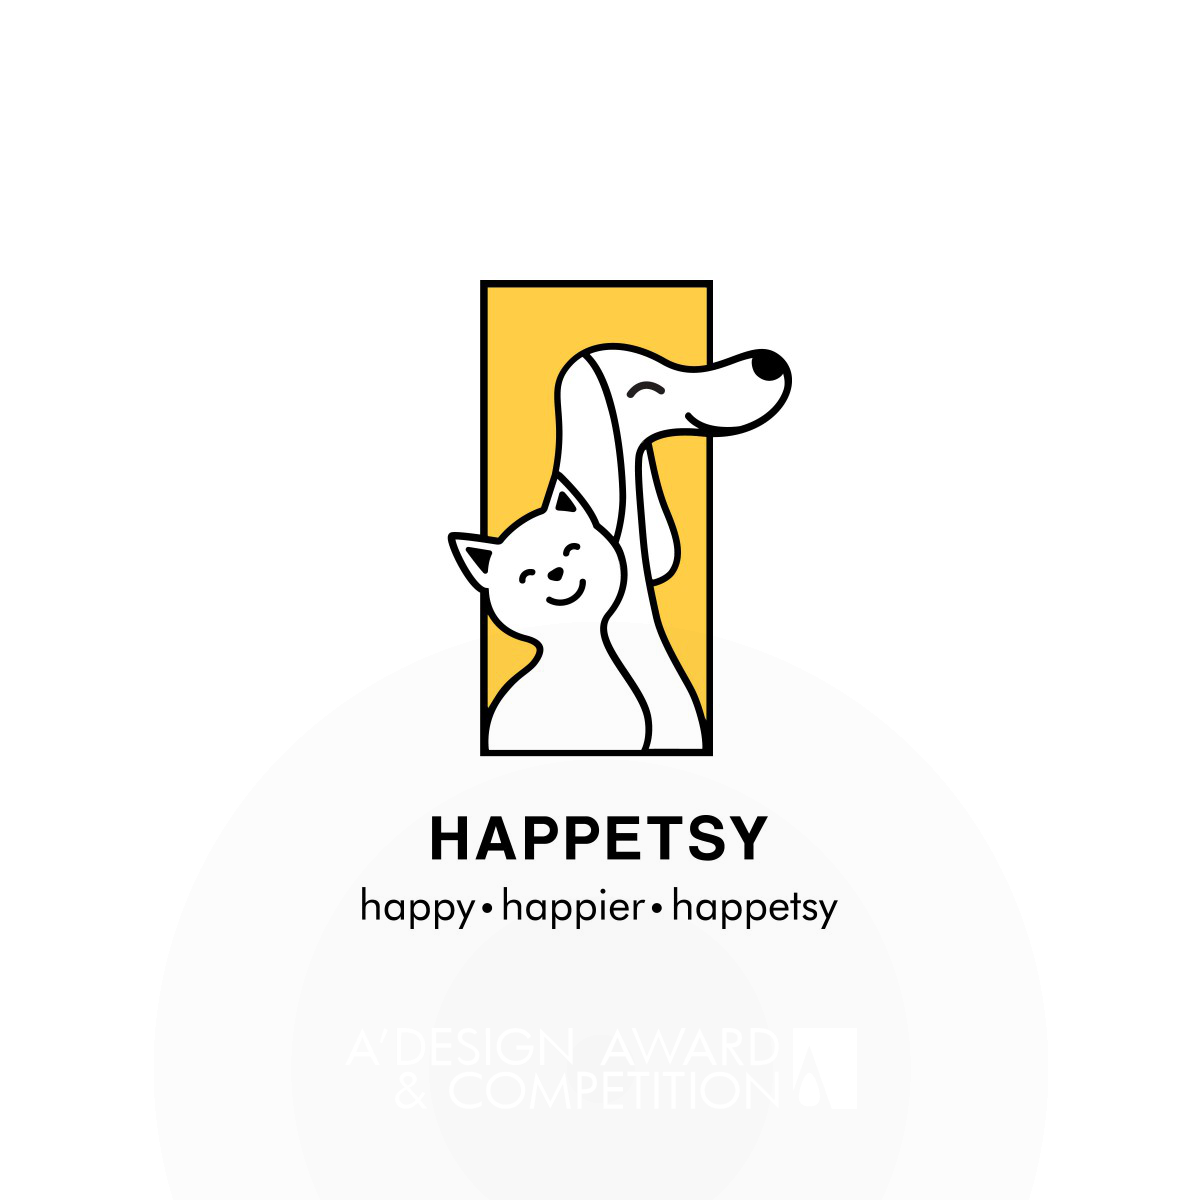  Happetsy：一种富有情感的品牌设计